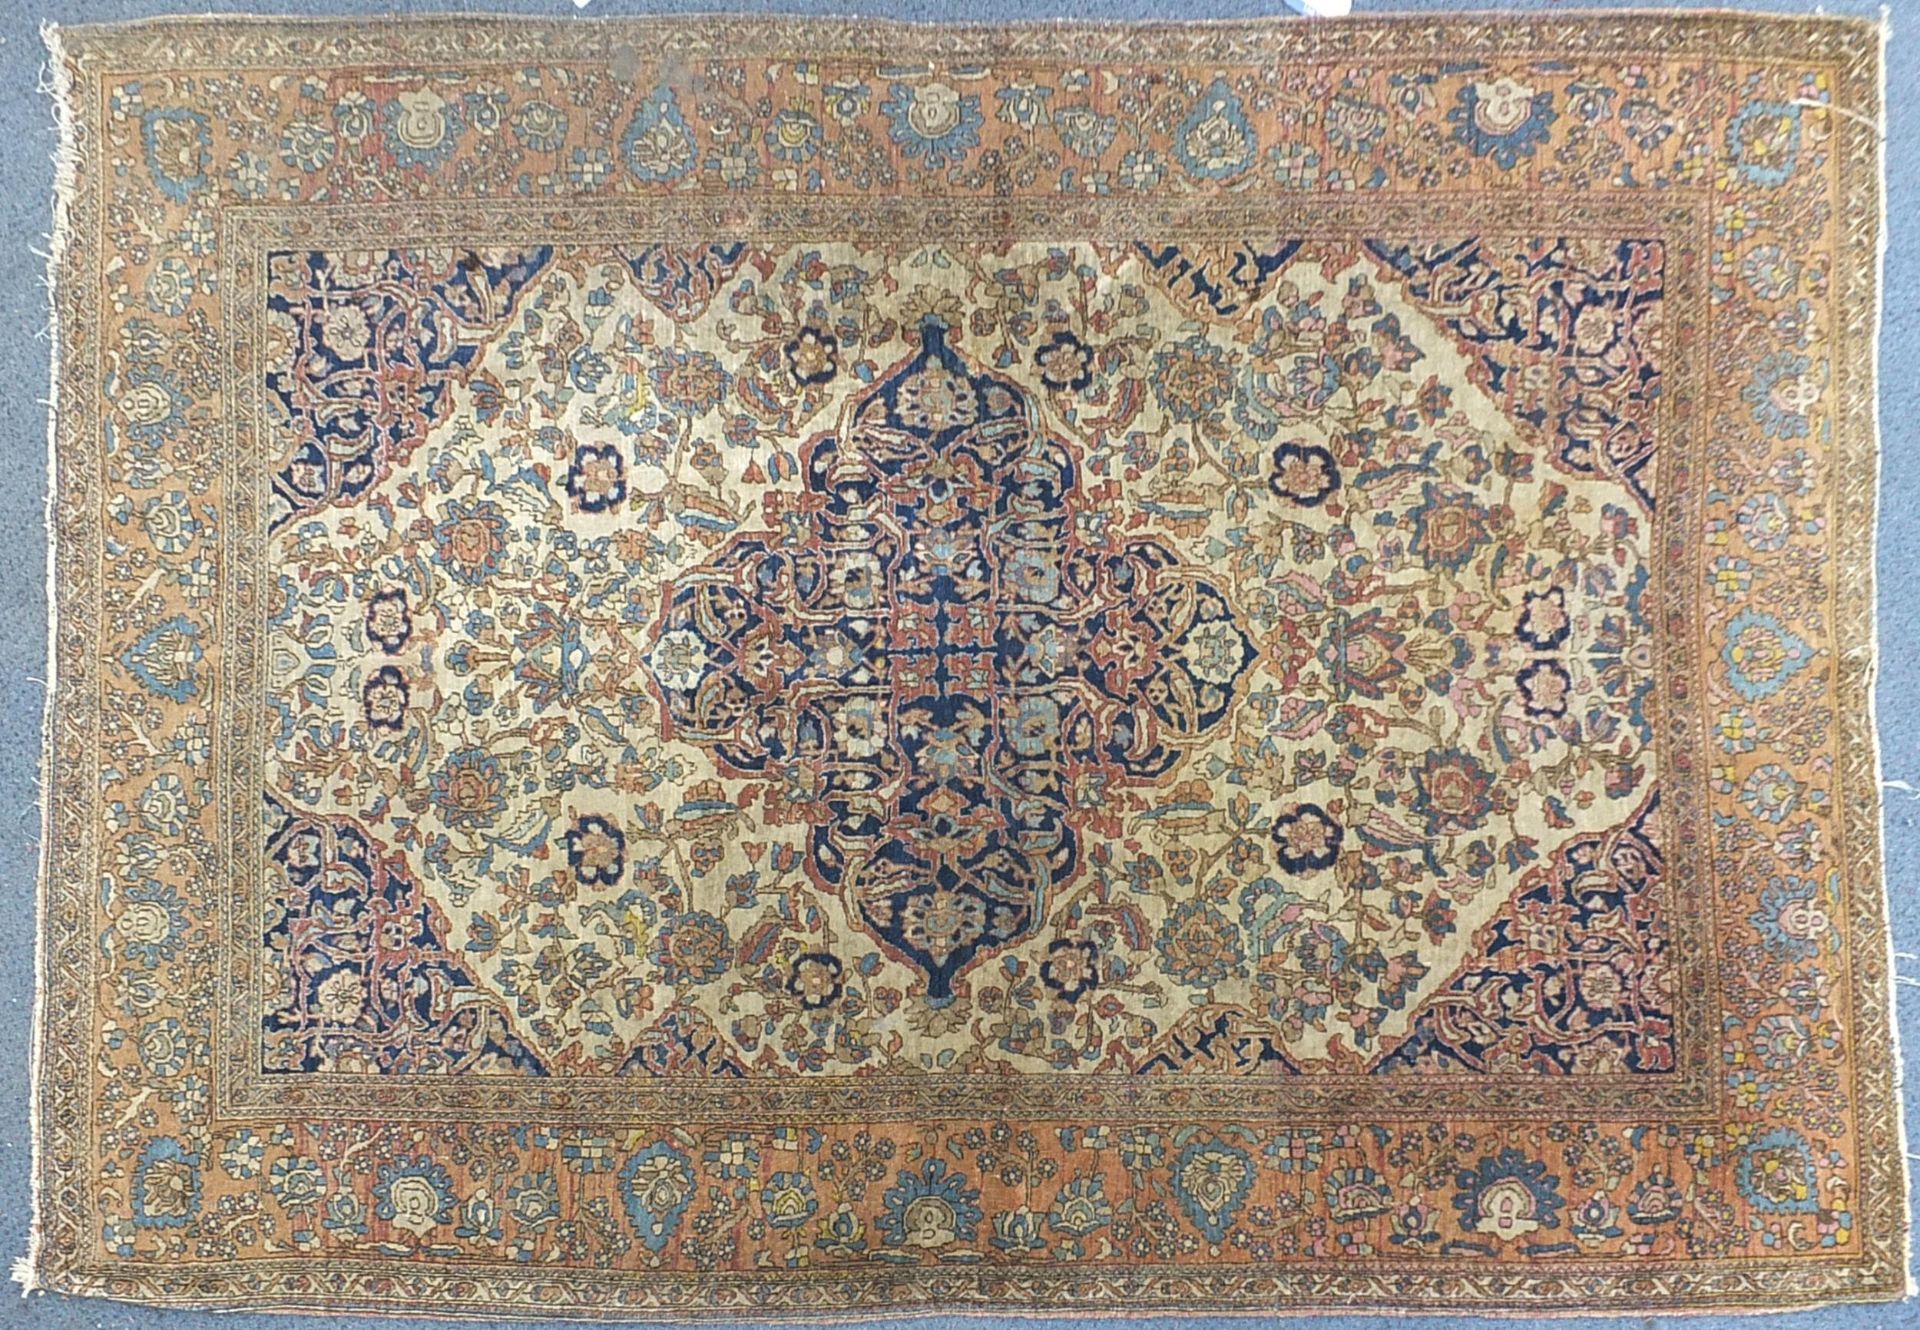 Rectangular beige and blue ground rug having an all over floral design, 205cm x 143cm